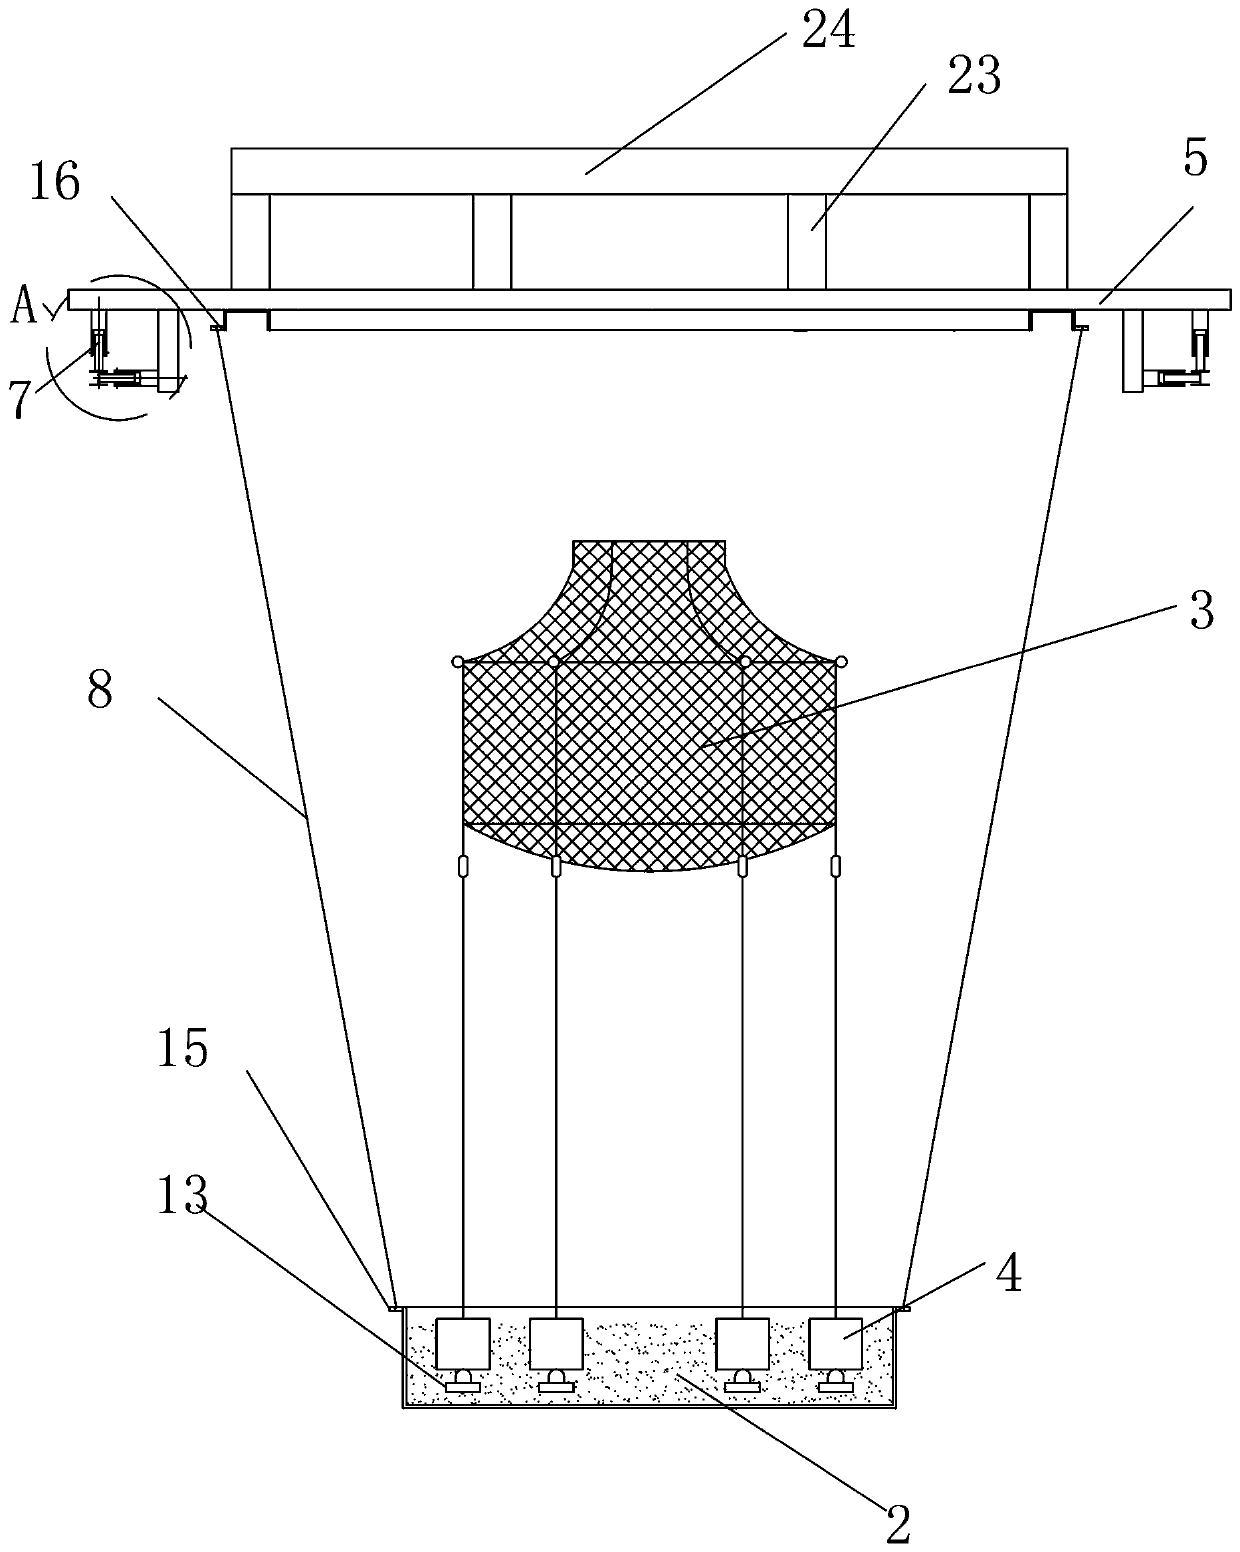 Tension leg net cage model test device